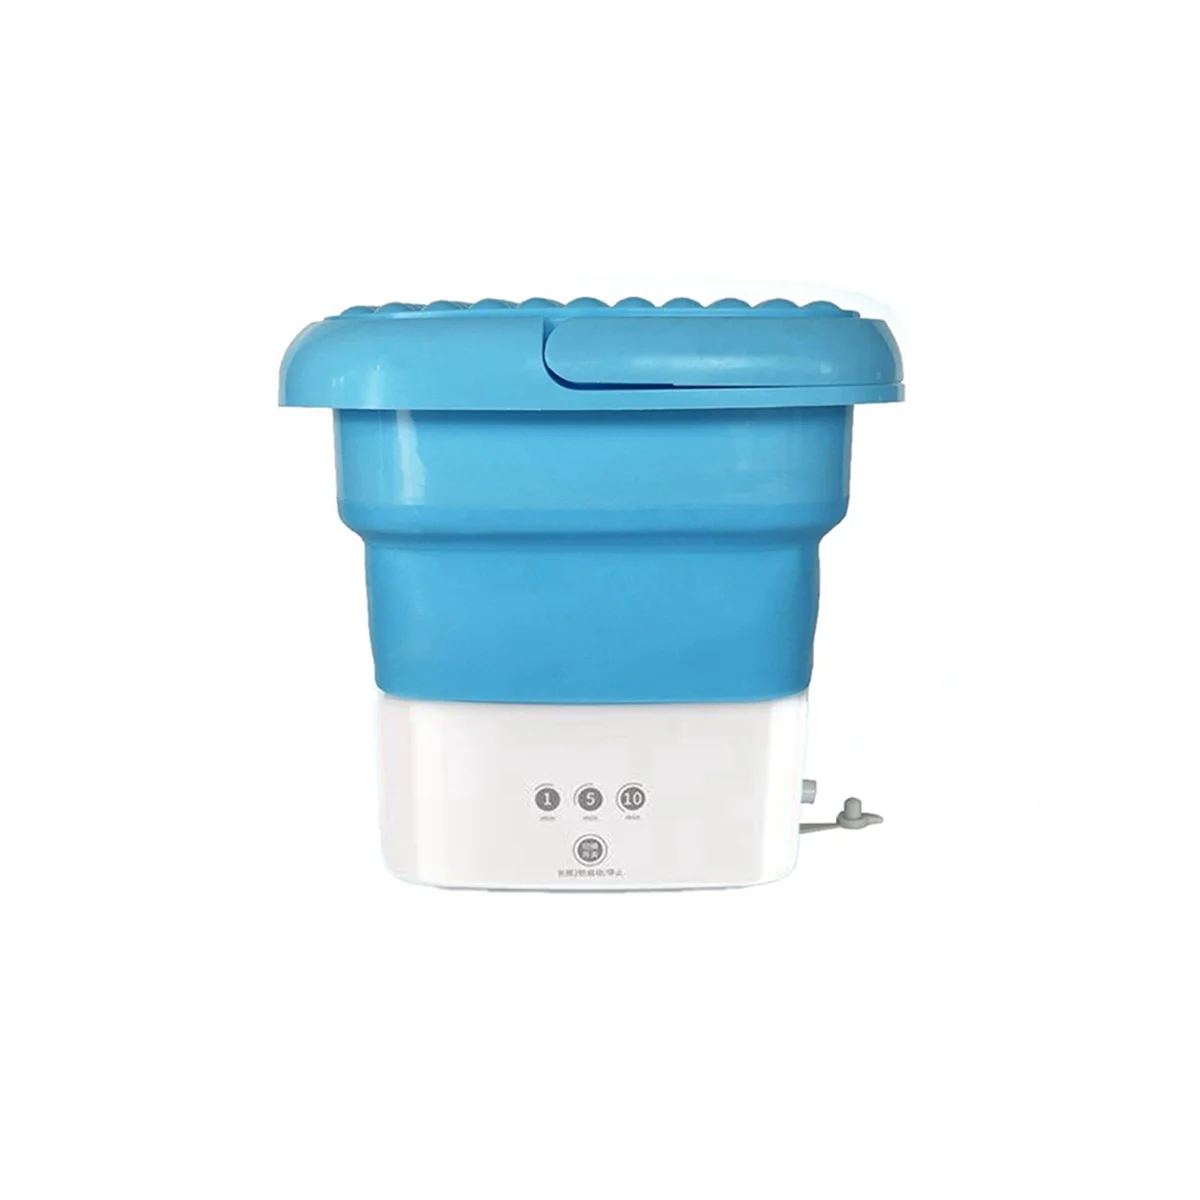 blue-washing-machine-mini-folding-washing-machine-combo-with-small-collapsible-drain-basket-eu-plug